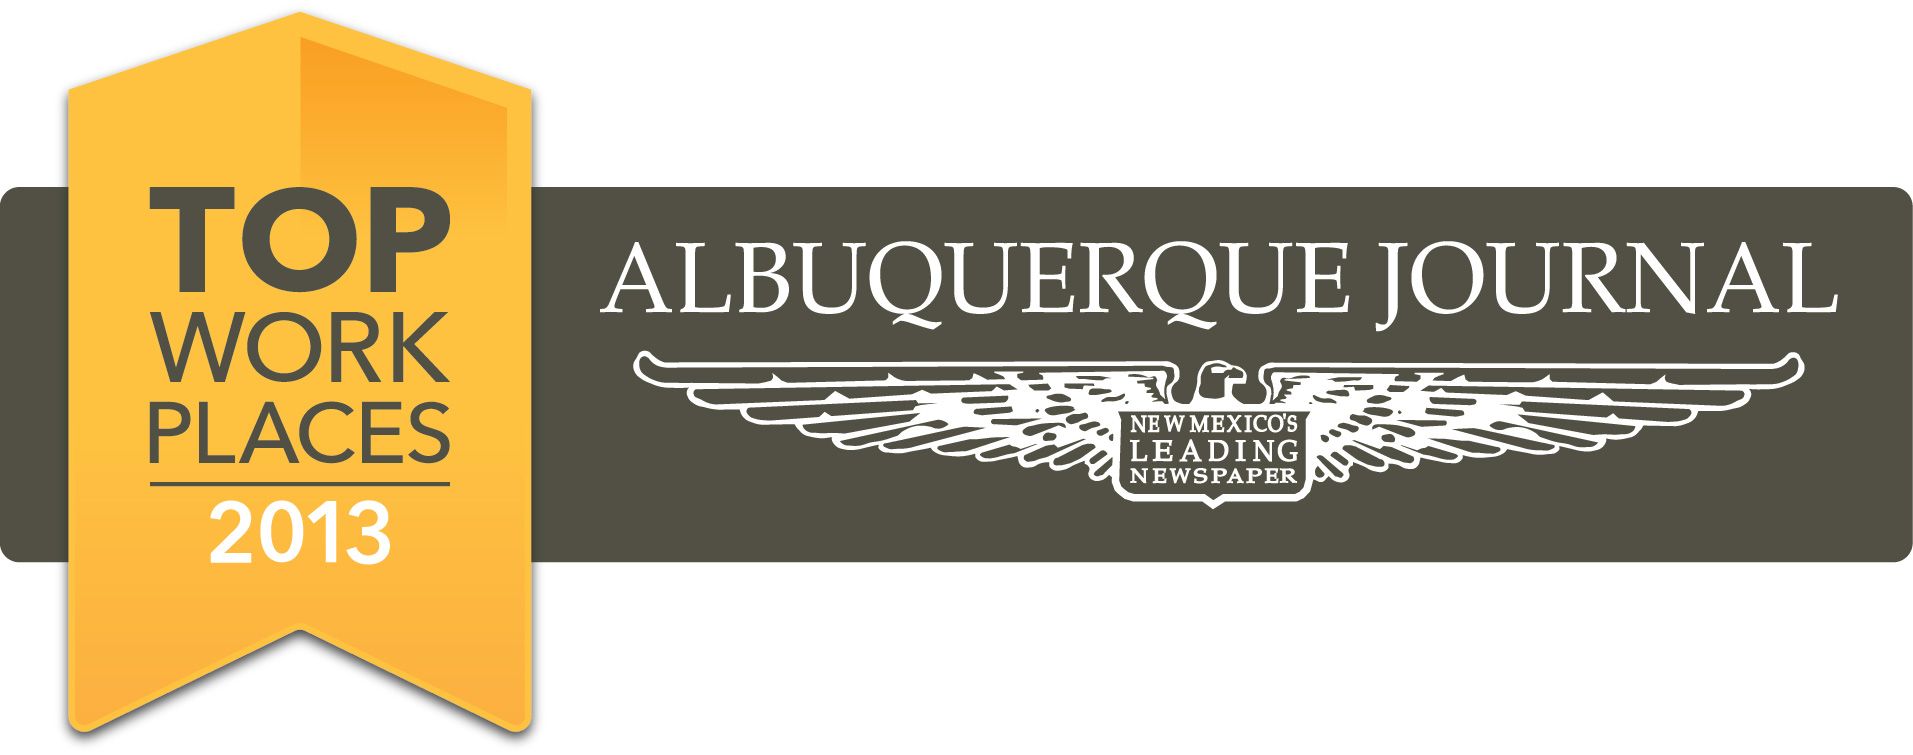 Albuquerque Journal Top Work Places 2013 Winner